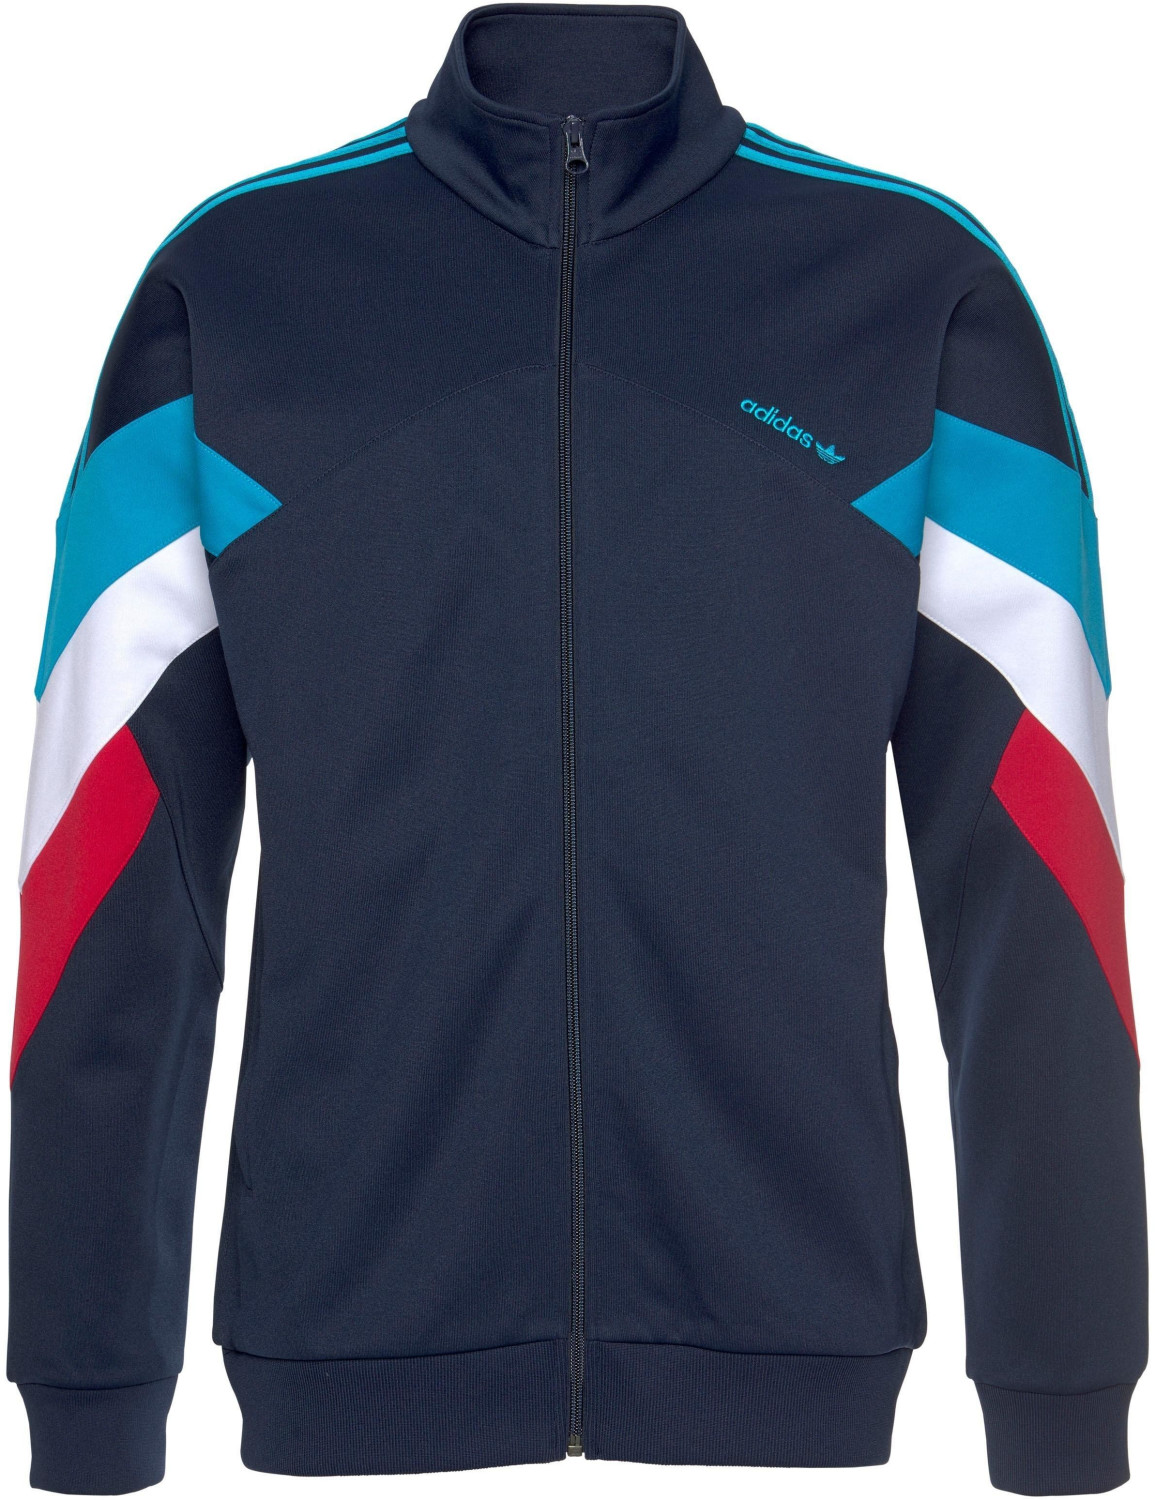 Adidas Palmeston Originals Jacket collegiate navy / bold aqua